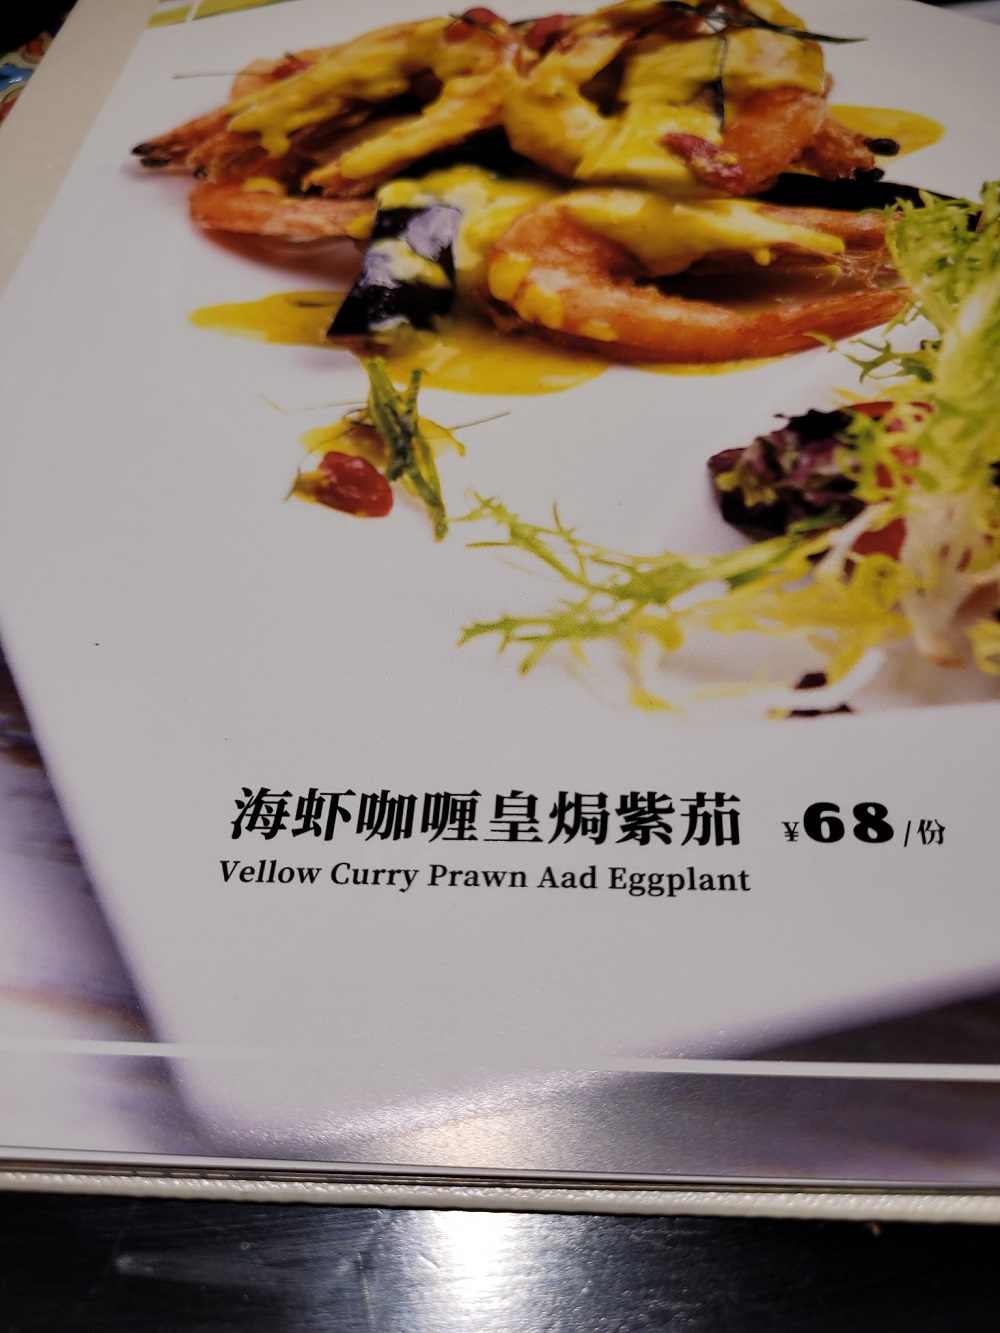 awful-english-translations-in-chinese-restaurant-menu-eggplant